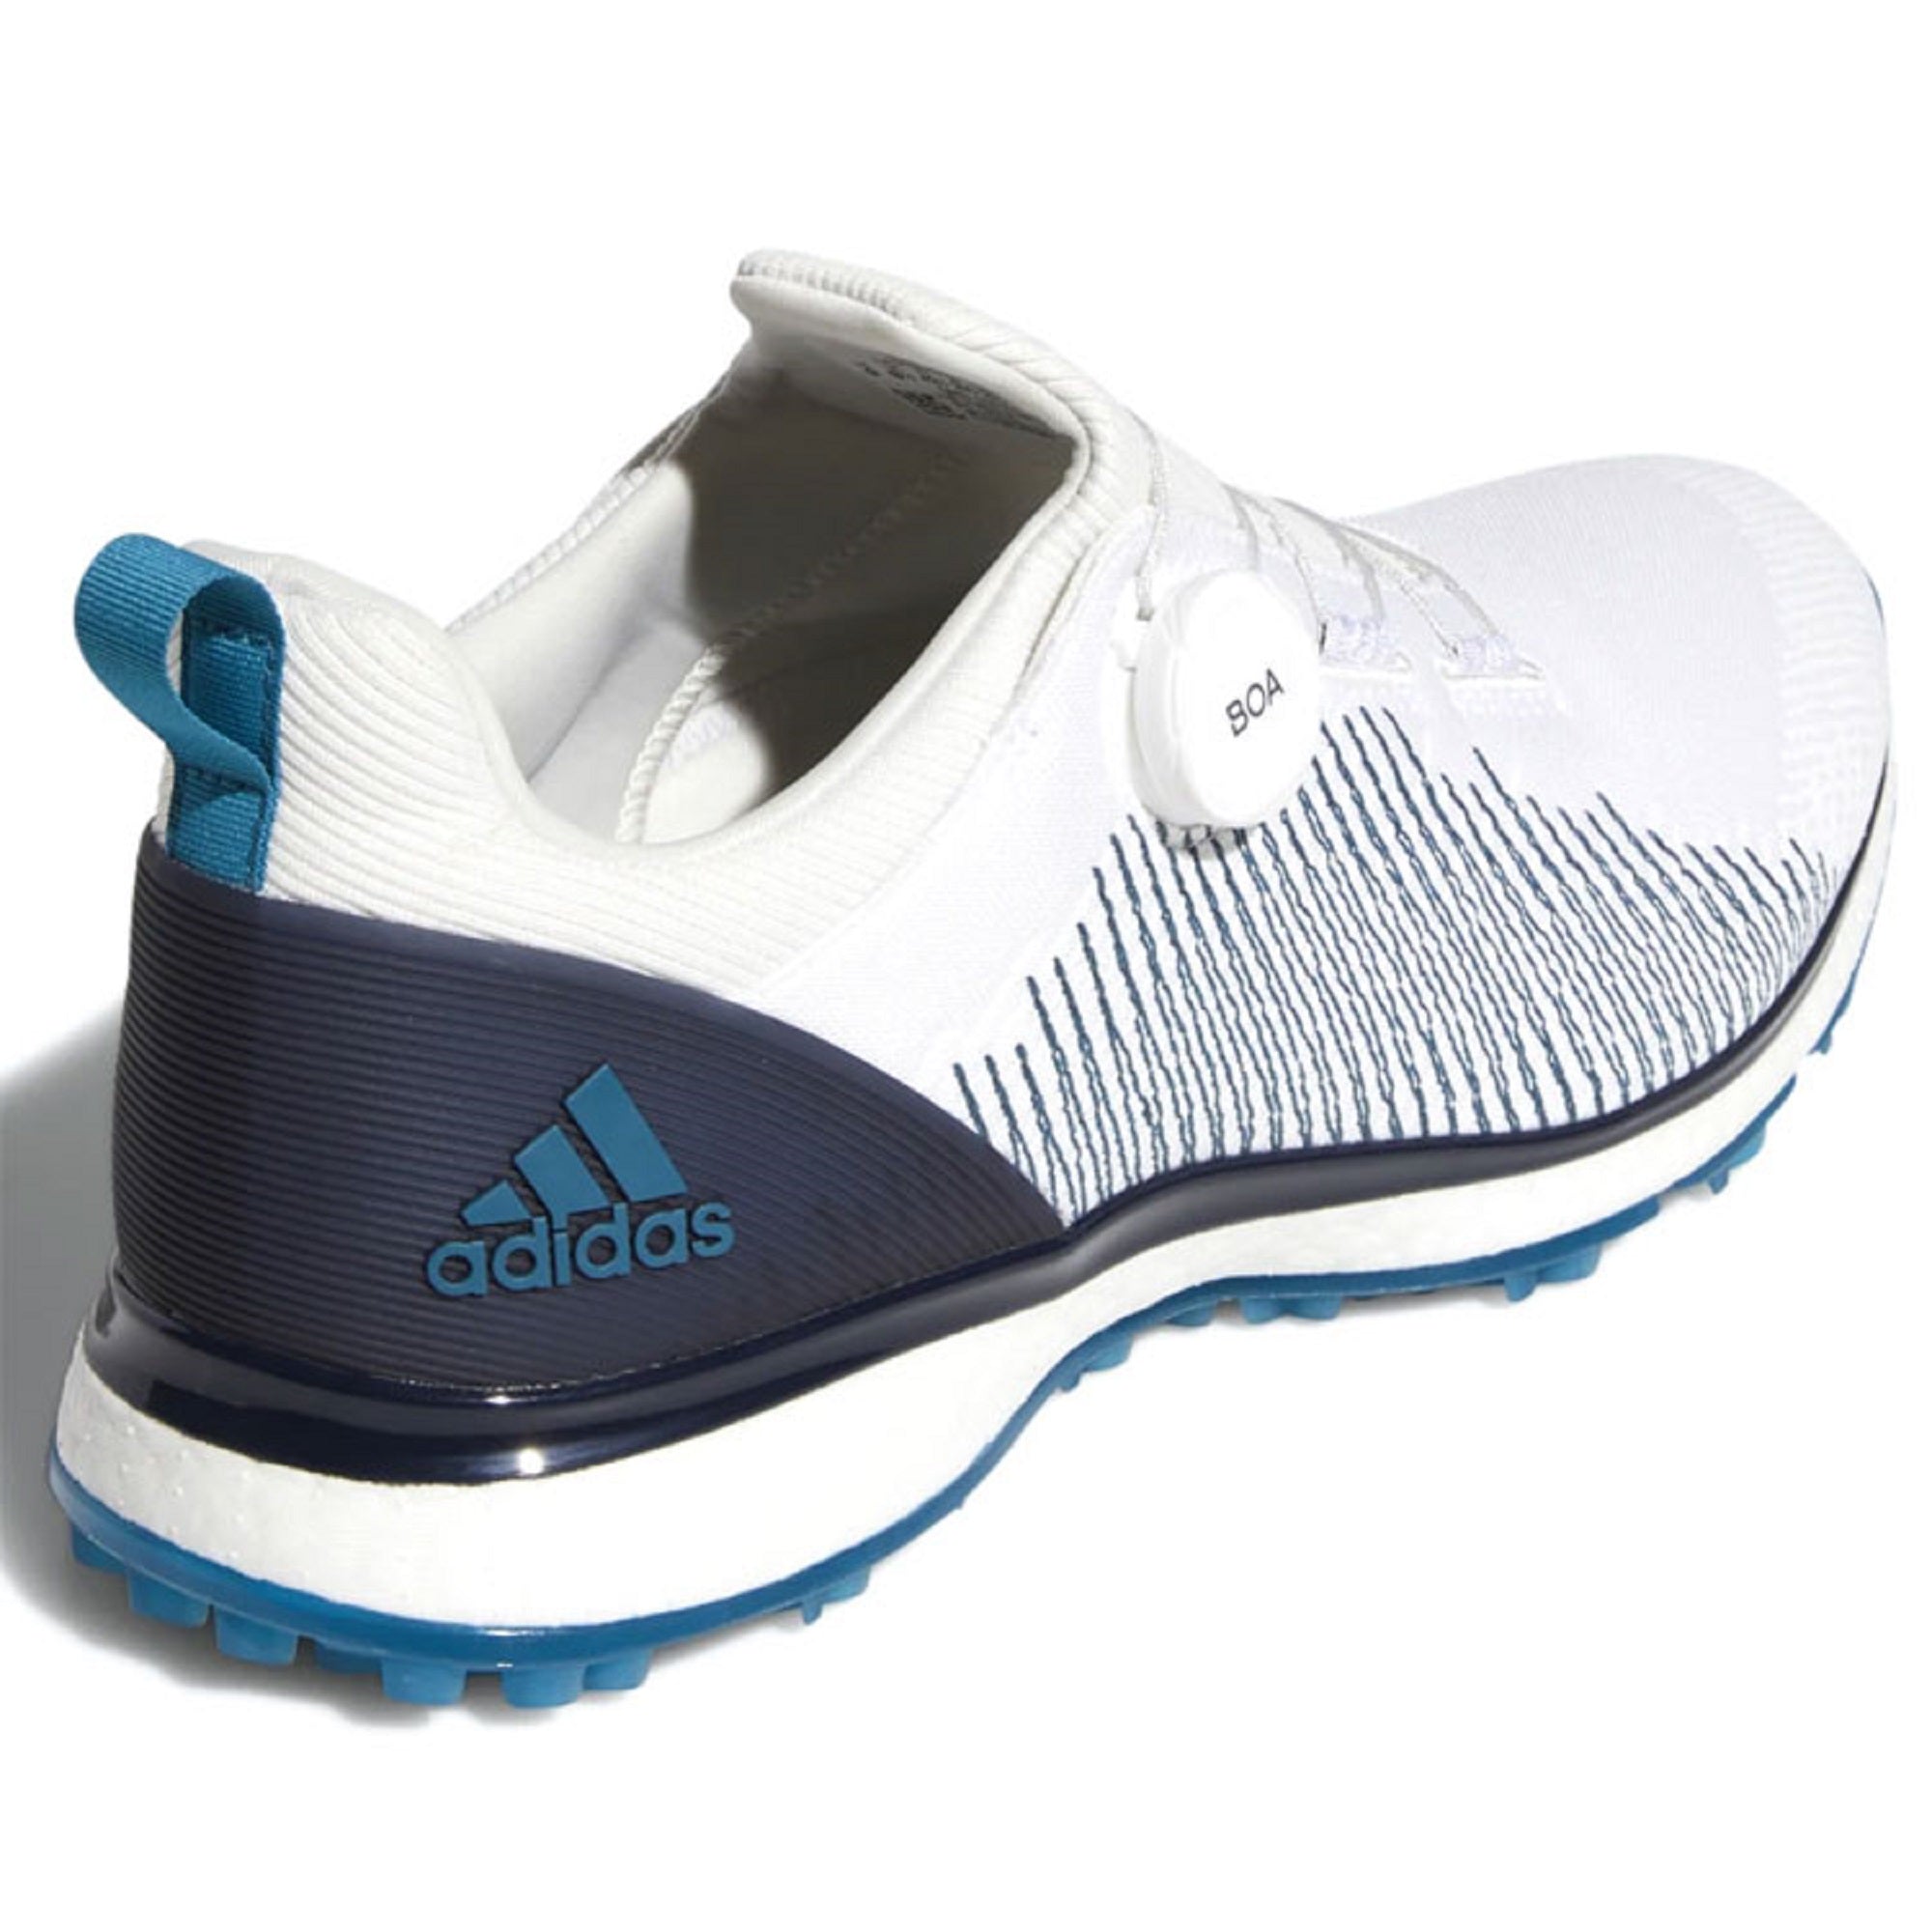 adidas forgefiber boa golf shoe